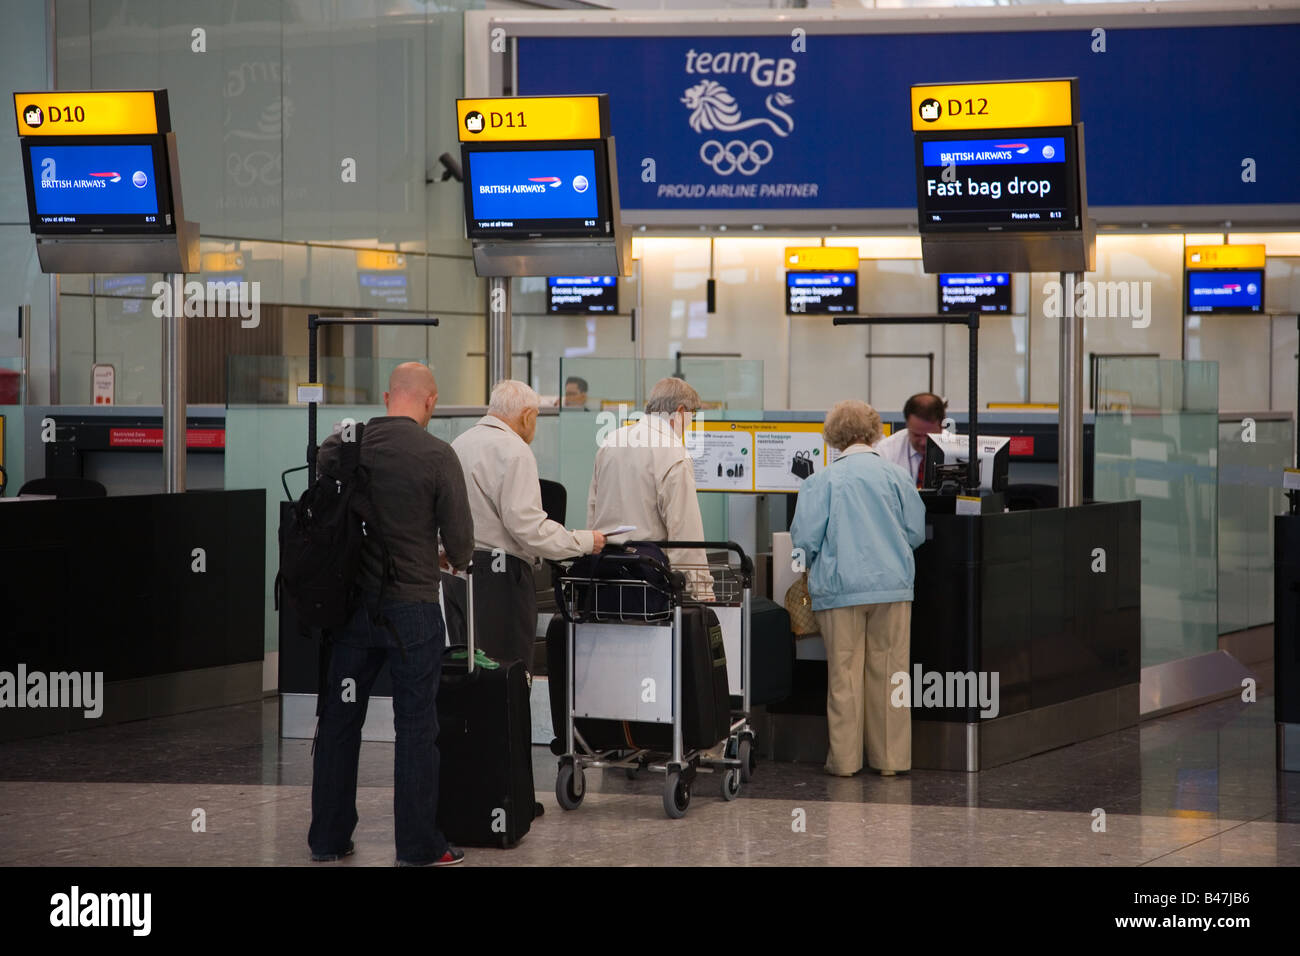 Fast bag drop at Heathrow Terminal 5 - British Airways Stock Photo - Alamy